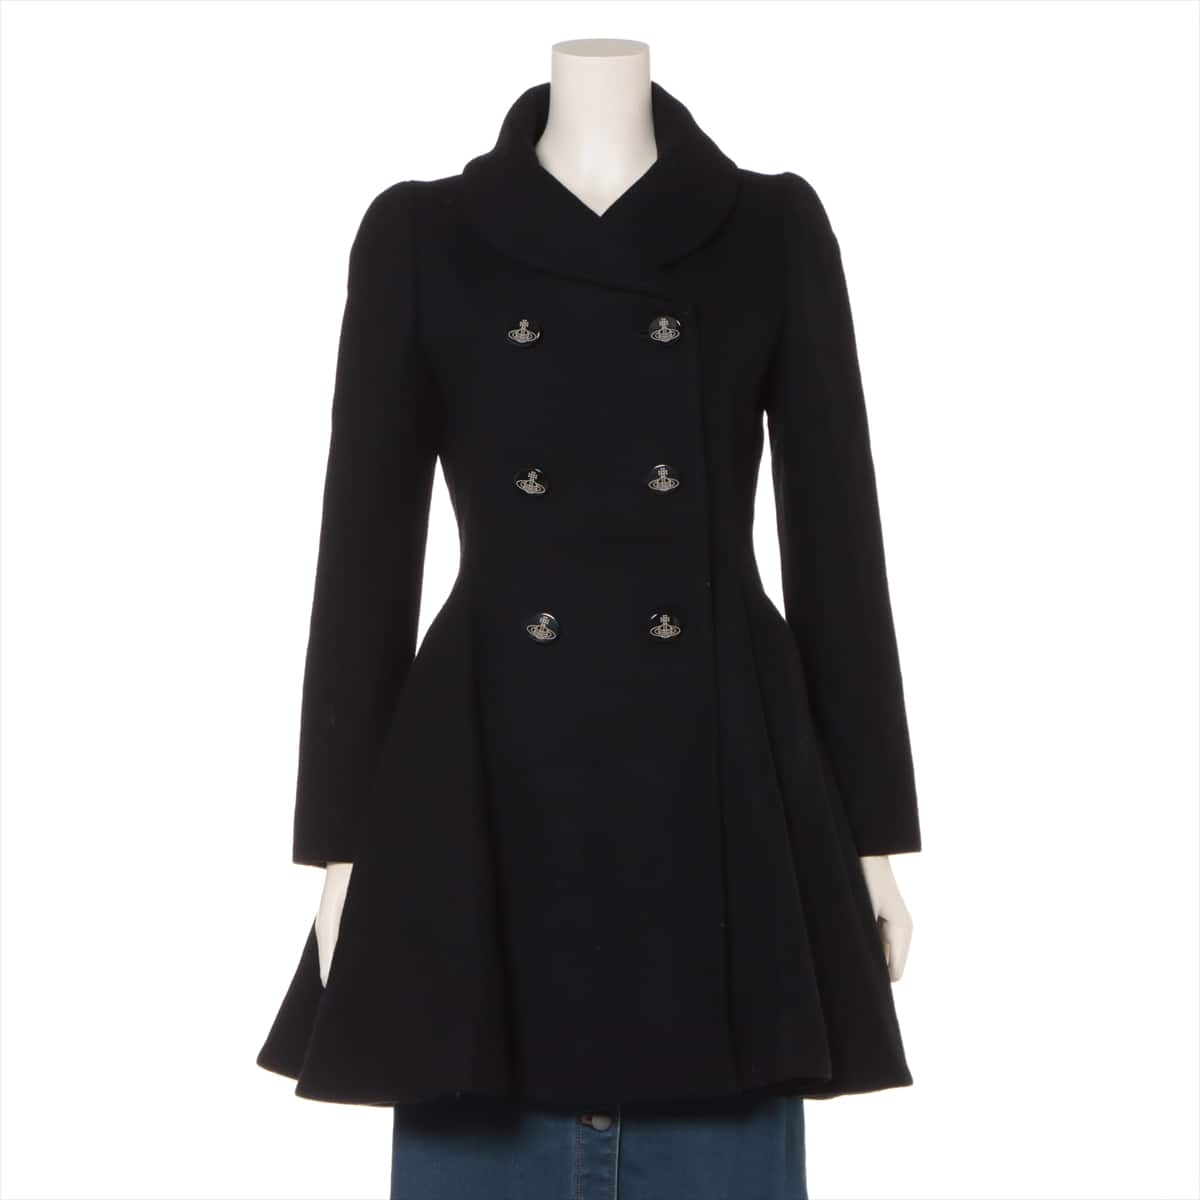 Vivienne Westwood RED LABEL Wool & Nylon coats 2 Ladies' Black Missing fur 16-01-642005 orb button